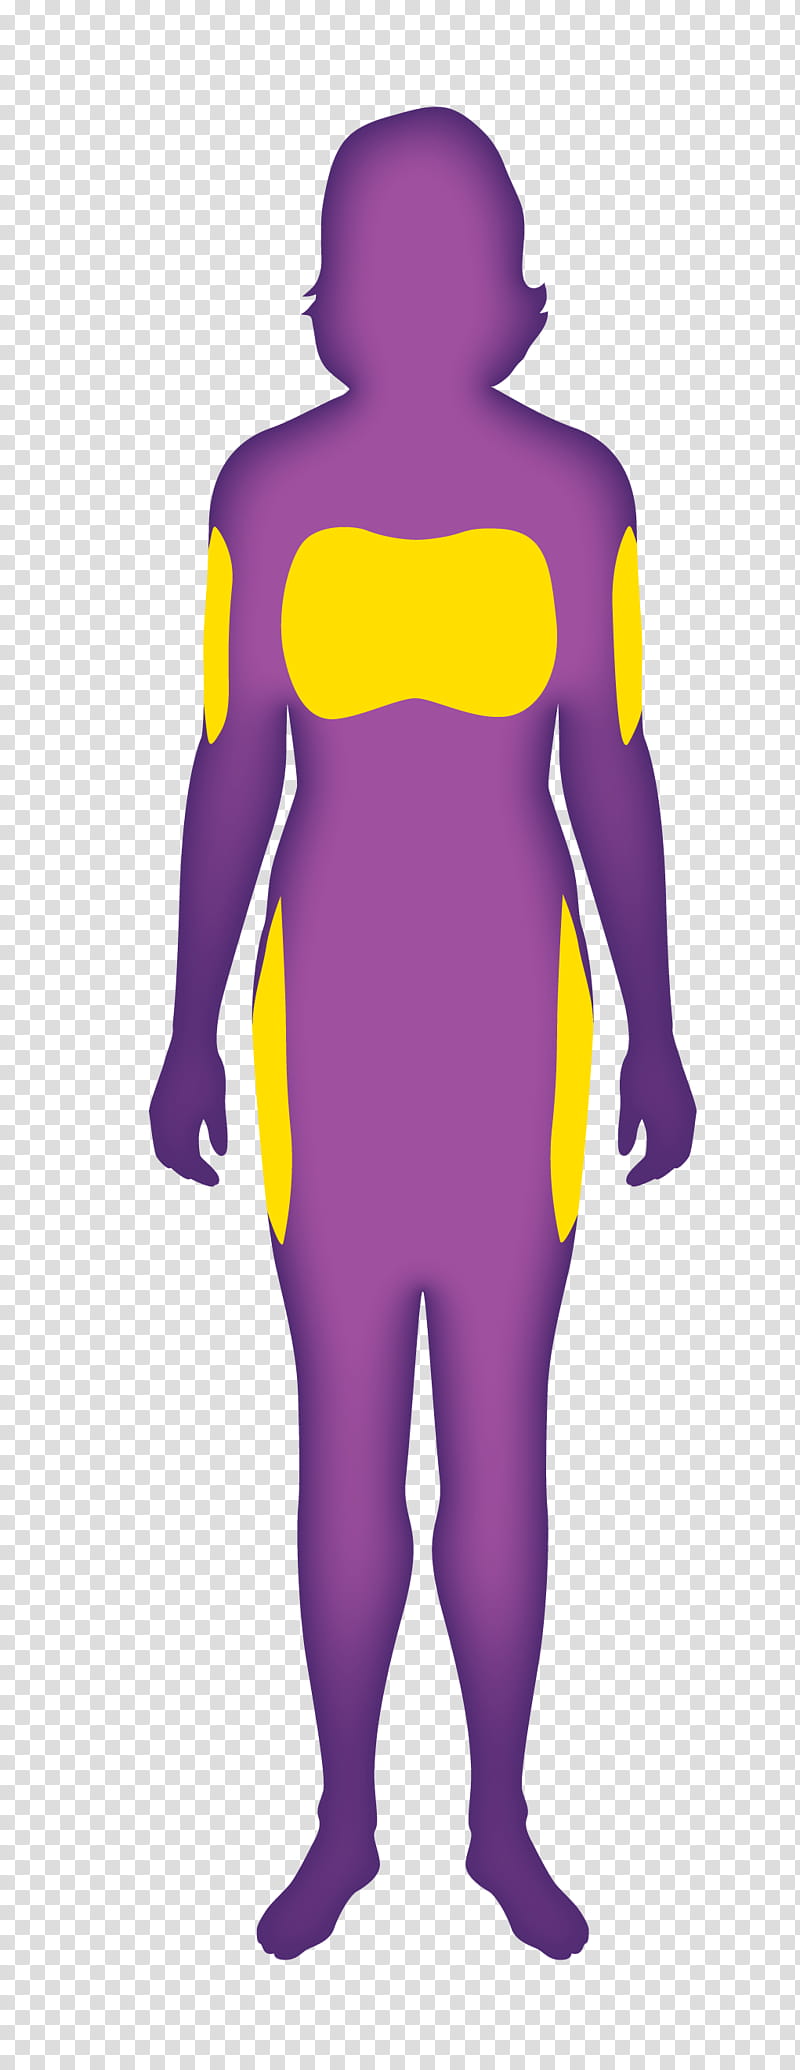 Fat, Drawing, Puberty, Human, Web Design, Human Body, Shoulder, Purple transparent background PNG clipart